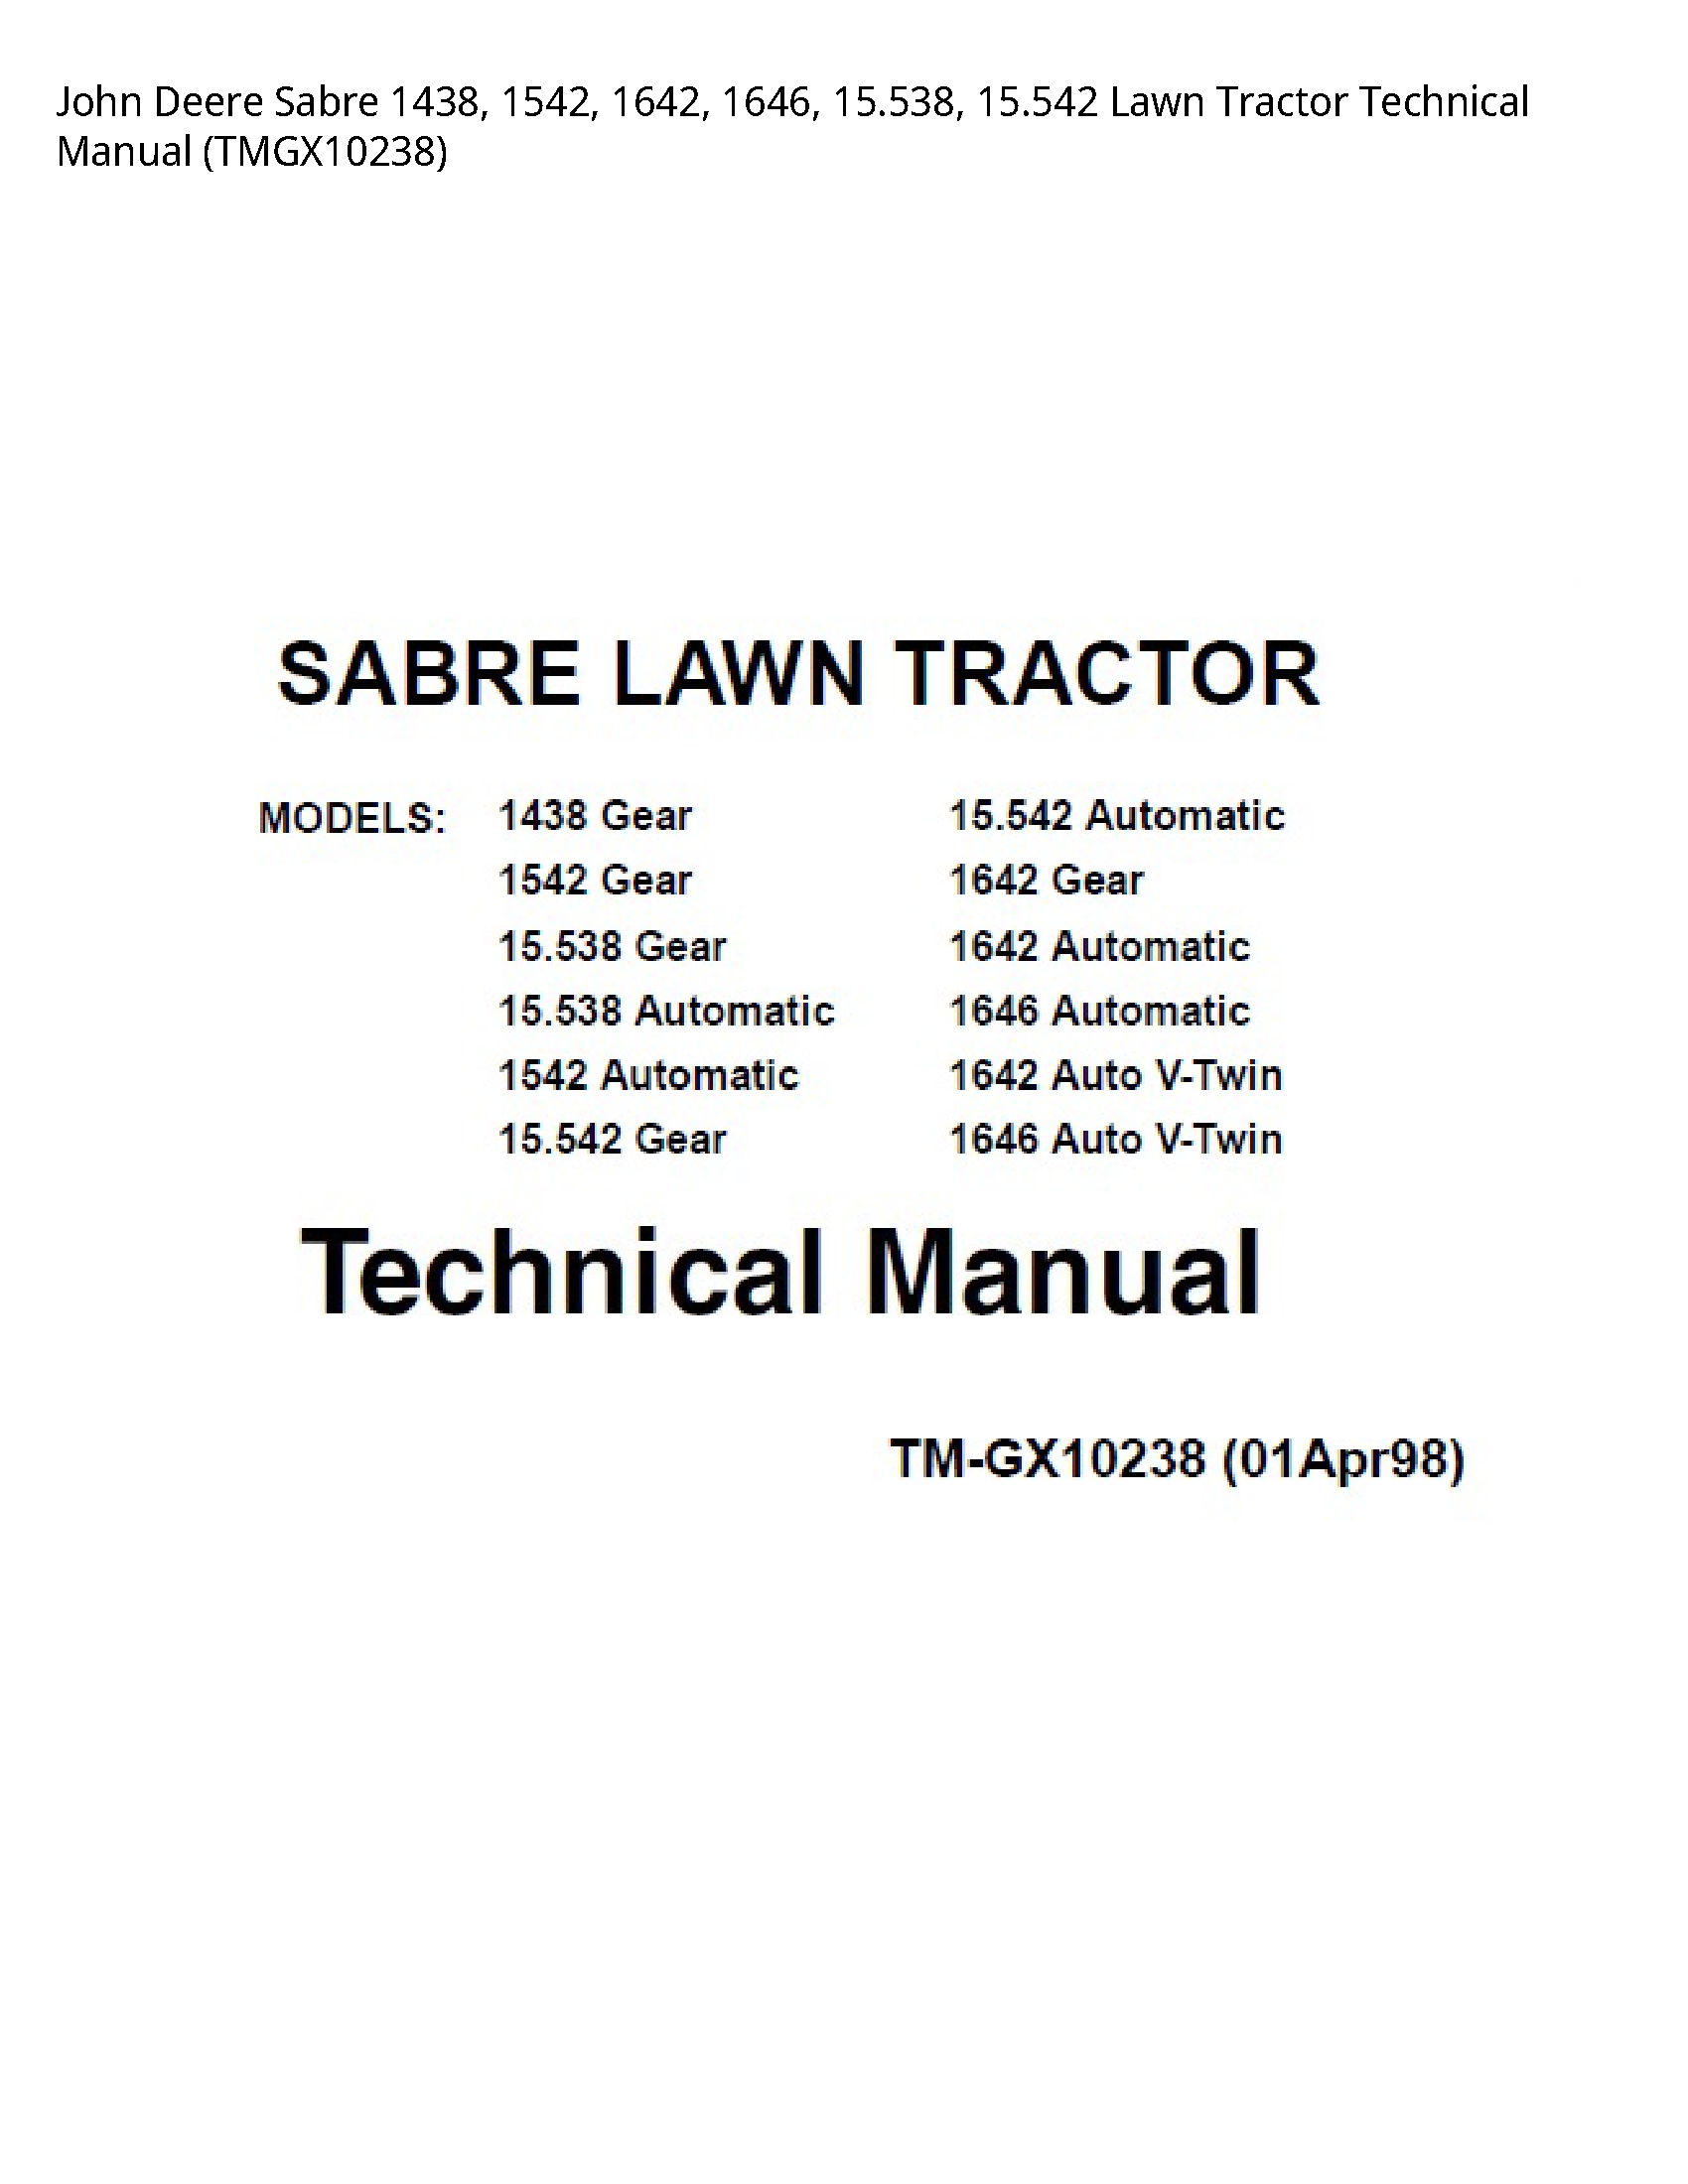 John Deere 1438 Sabre Lawn Tractor Technical manual